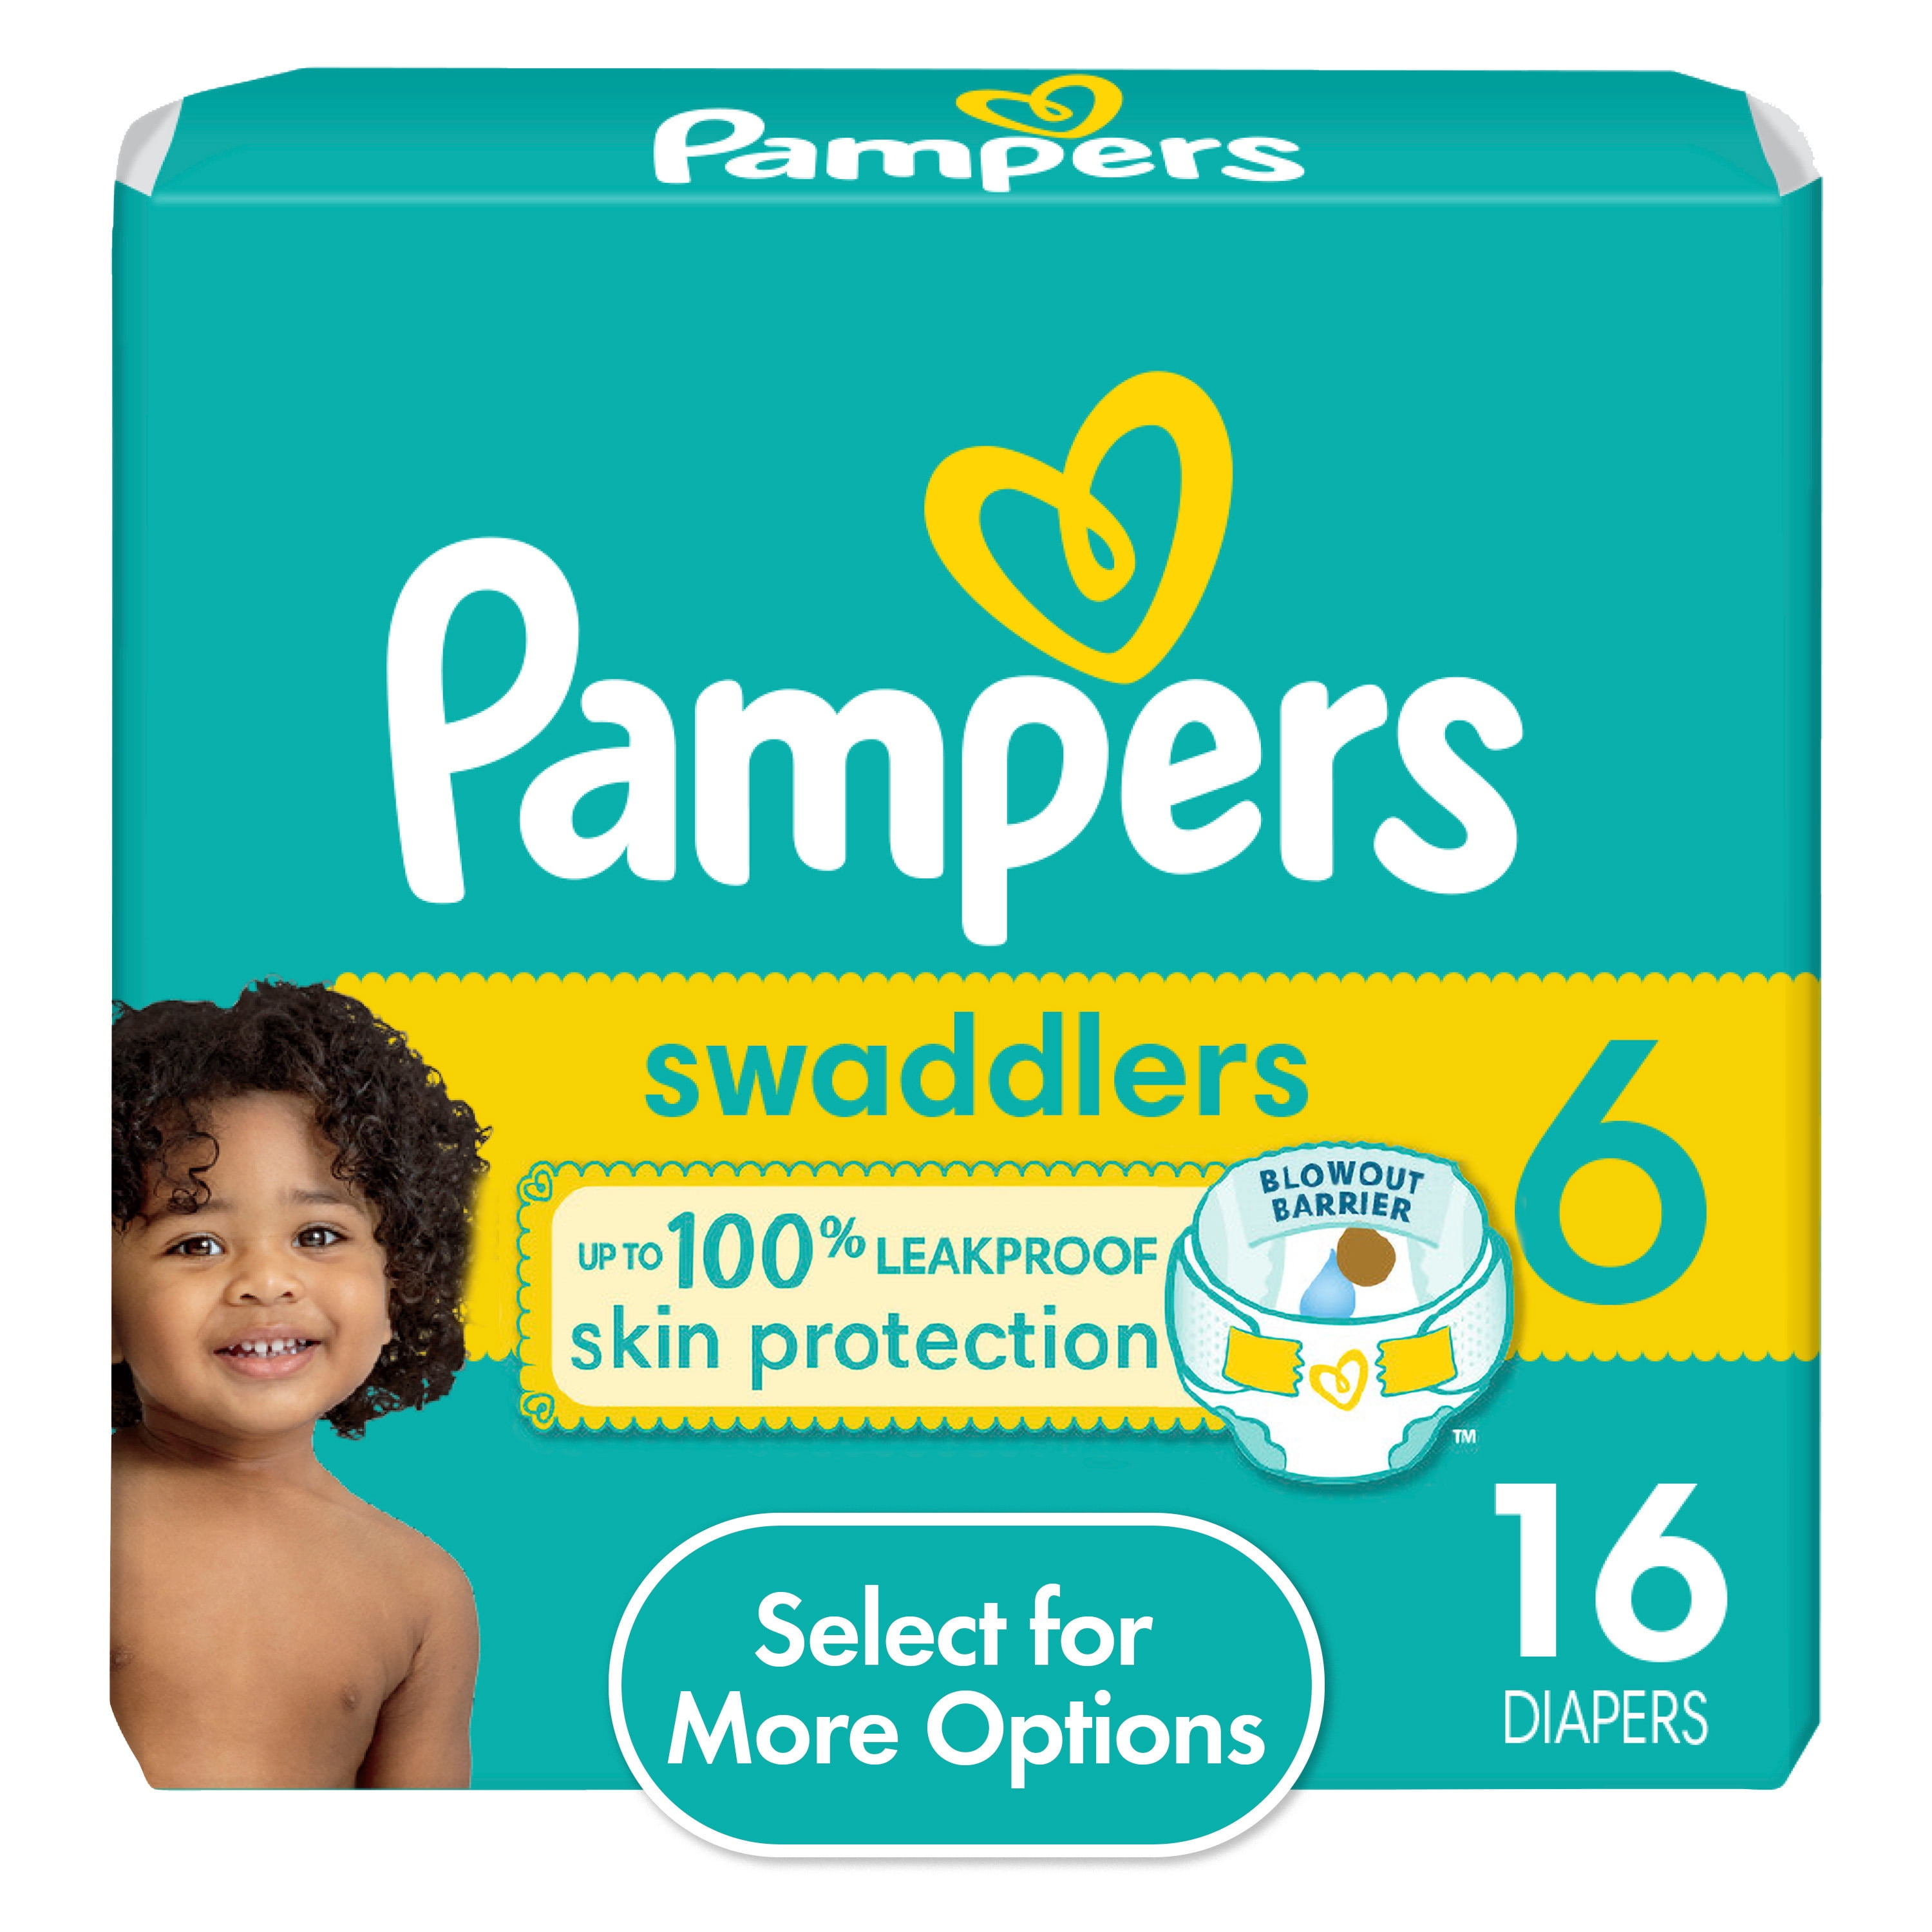 Pampers - Couches Premium Care Newborn (2-5 kg), 26 pcs